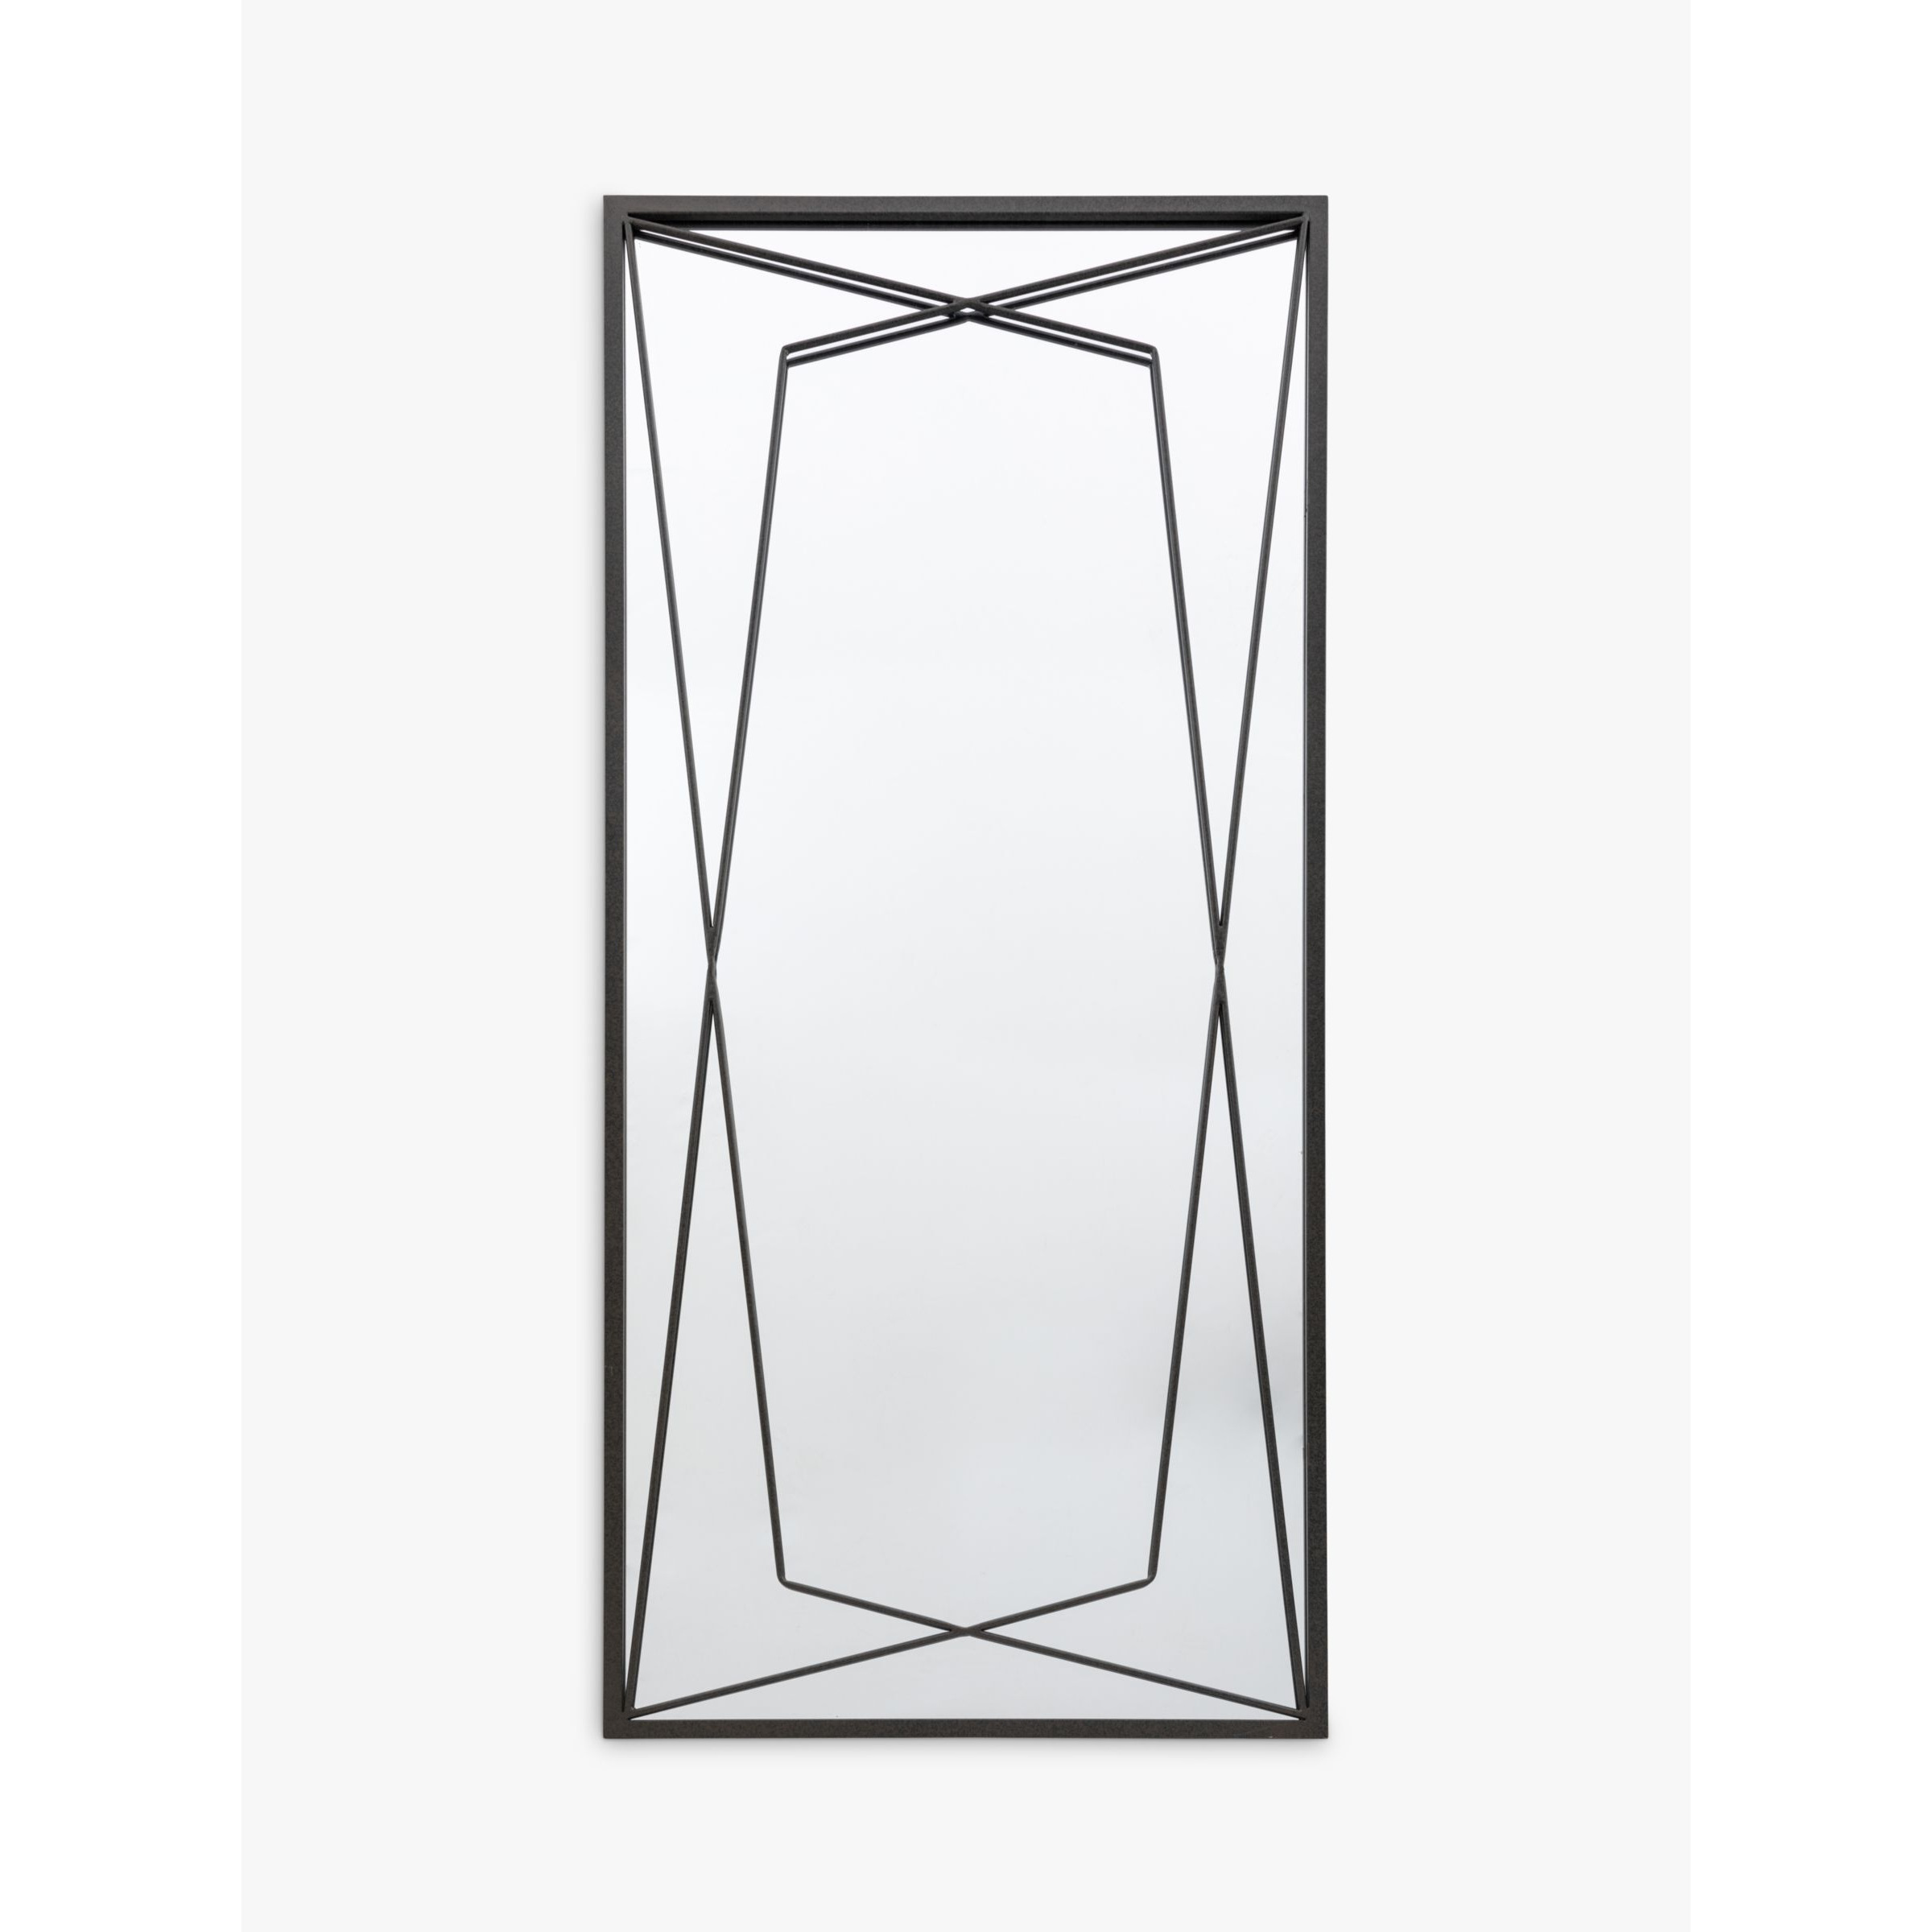 Gallery Direct Thurrock Rectangular Metal Frame Leaner Mirror, 160 x 75cm, Black - image 1